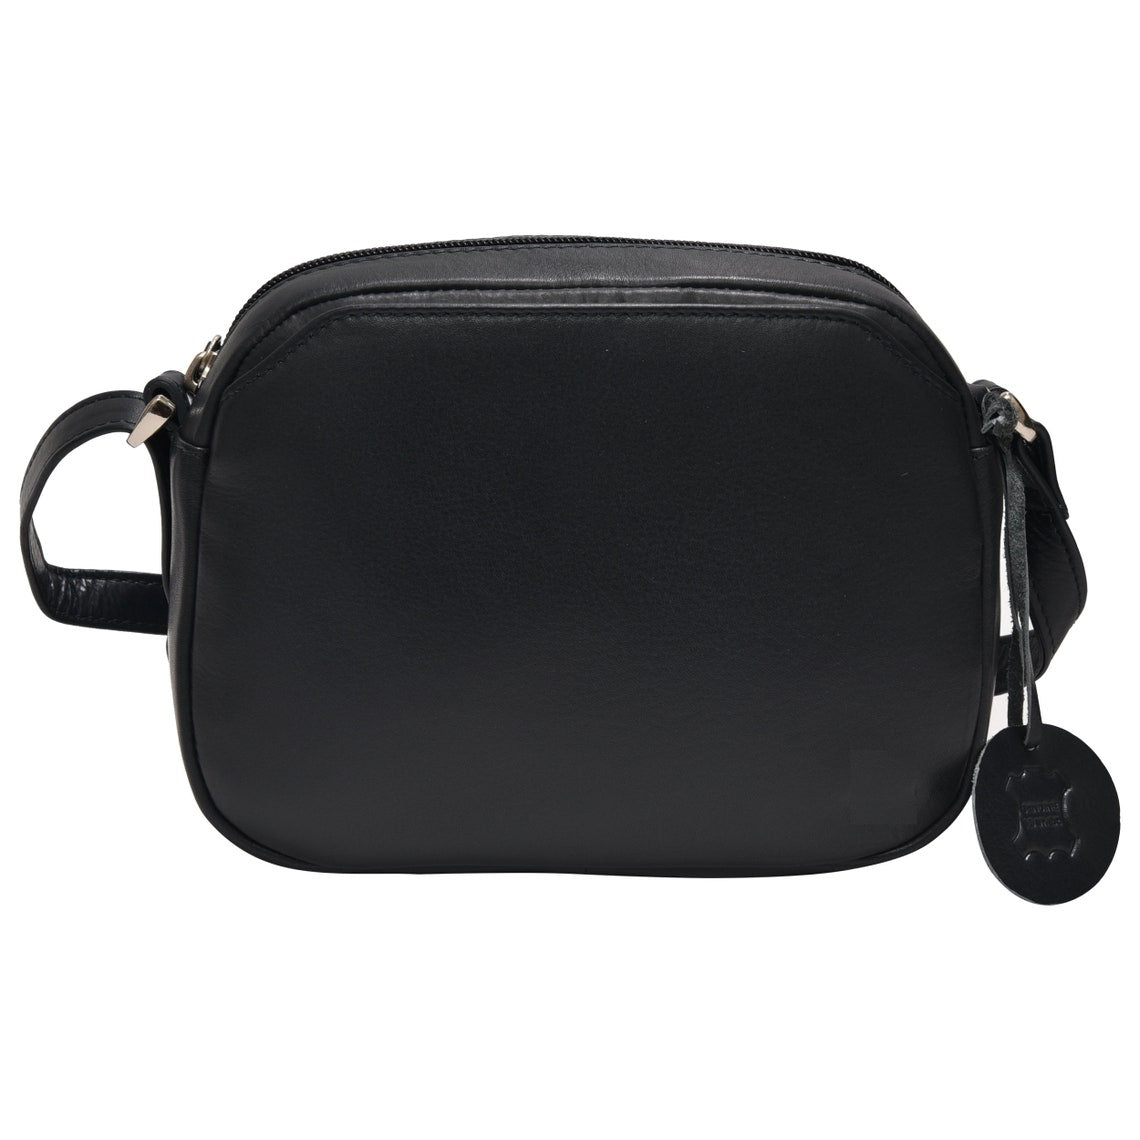 GT-H14: G&T Full-grain Leather Classic Shoulder Bag, Crossbody Bag